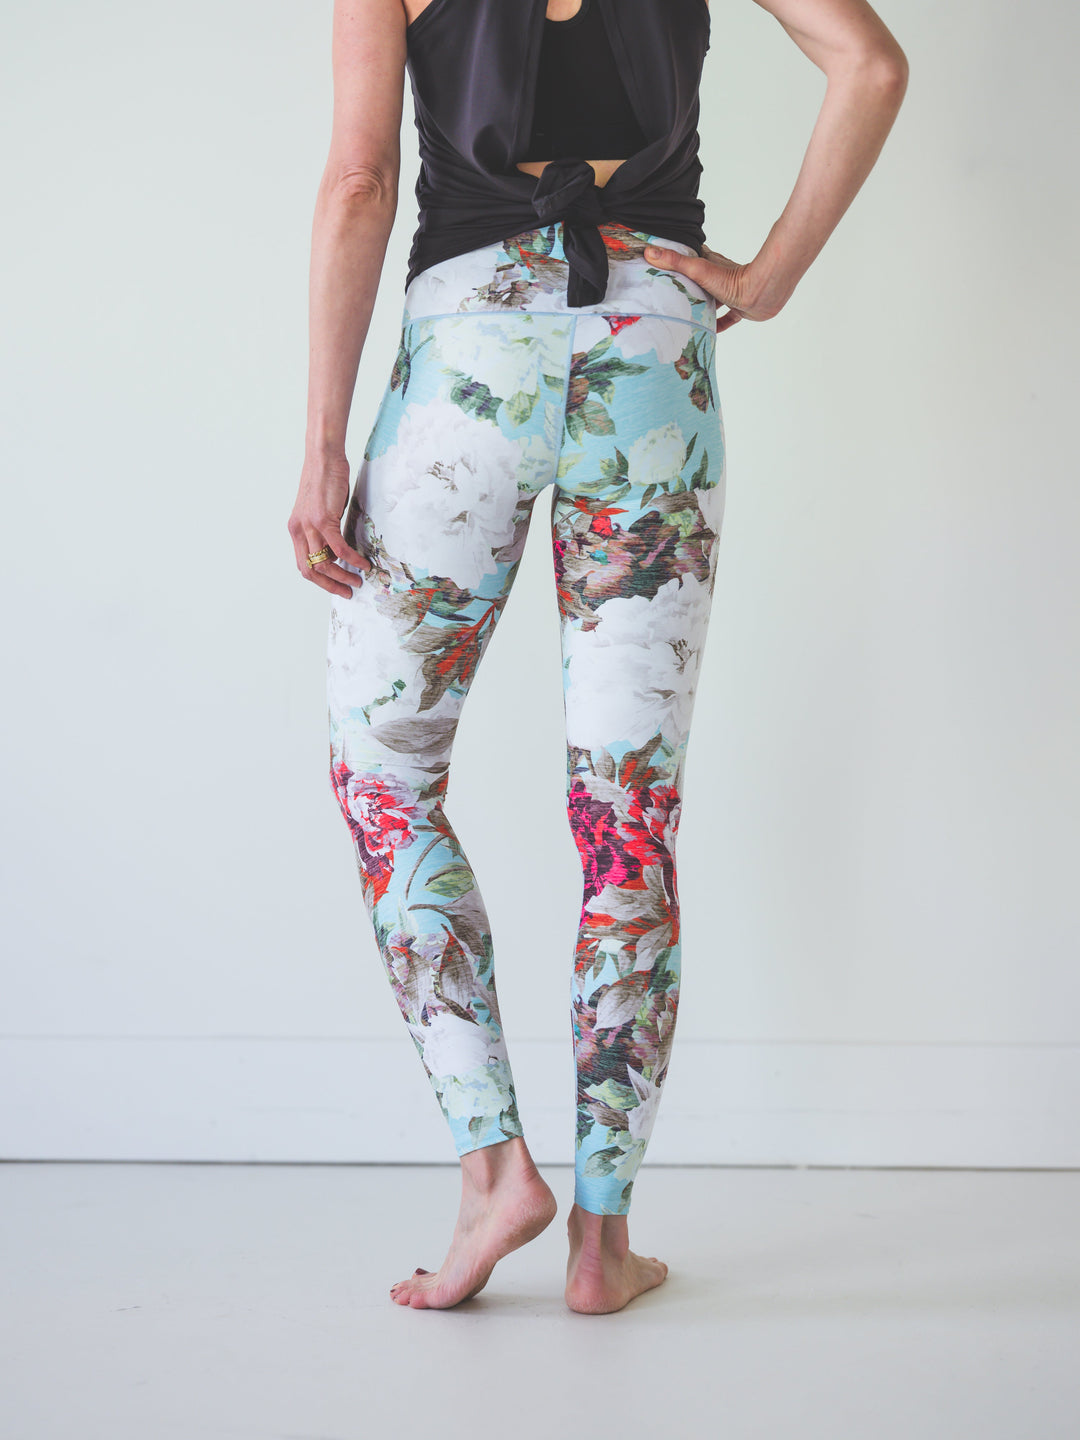 Yoga Pants | Colorado Threads | Teal Floral Yoga Pants *FINAL SALE*